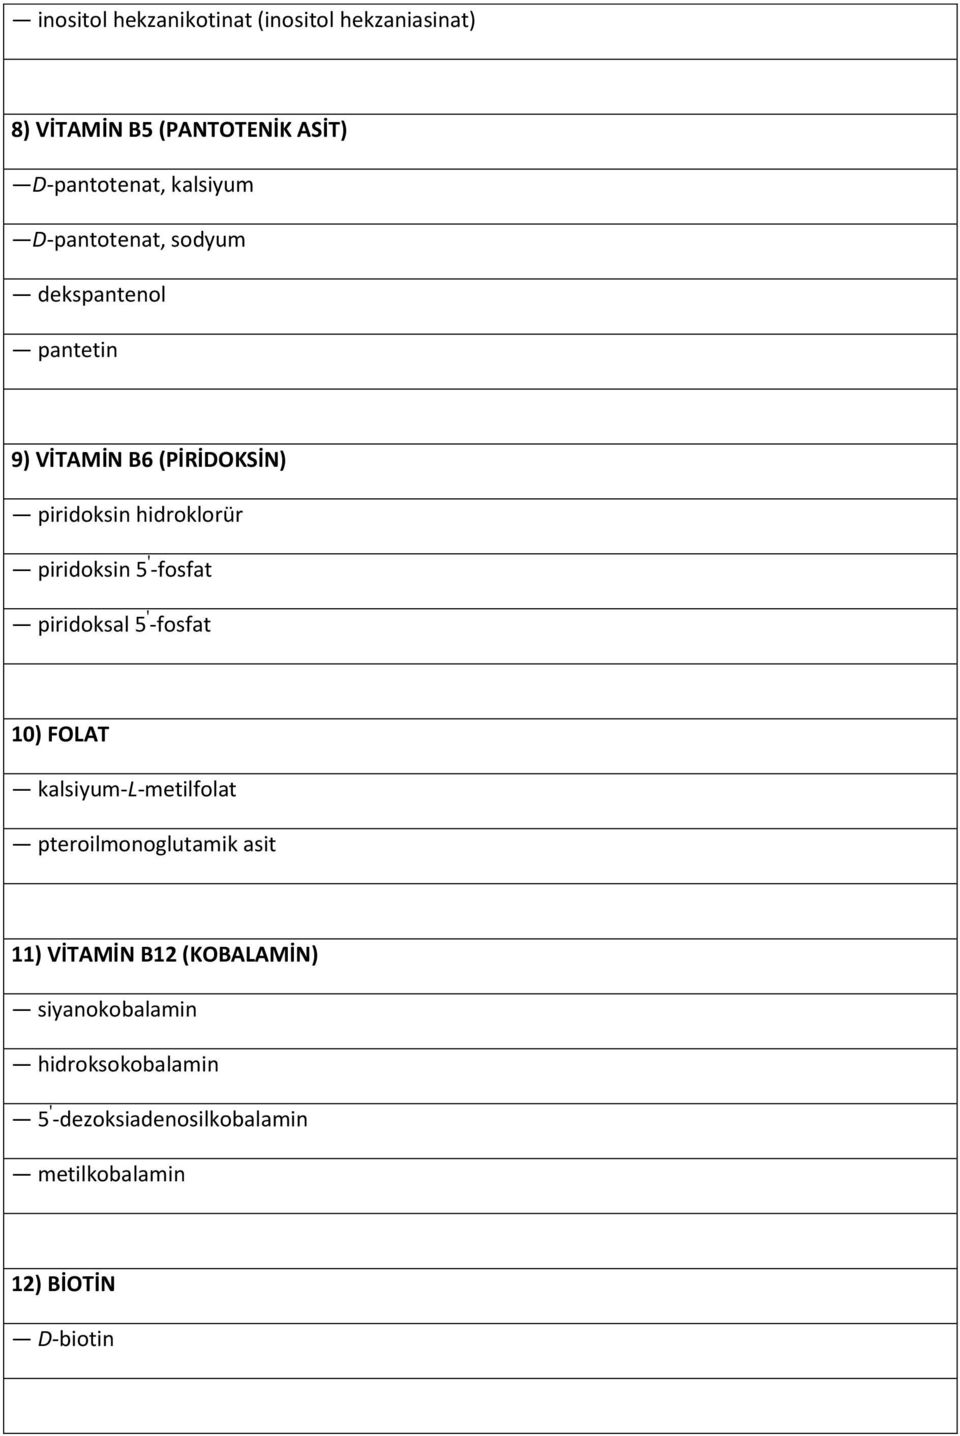 ꞌ -fosfat piridoksal 5 ꞌ -fosfat 10) FOLAT kalsiyum-l-metilfolat pteroilmonoglutamik asit 11) VİTAMİN B12